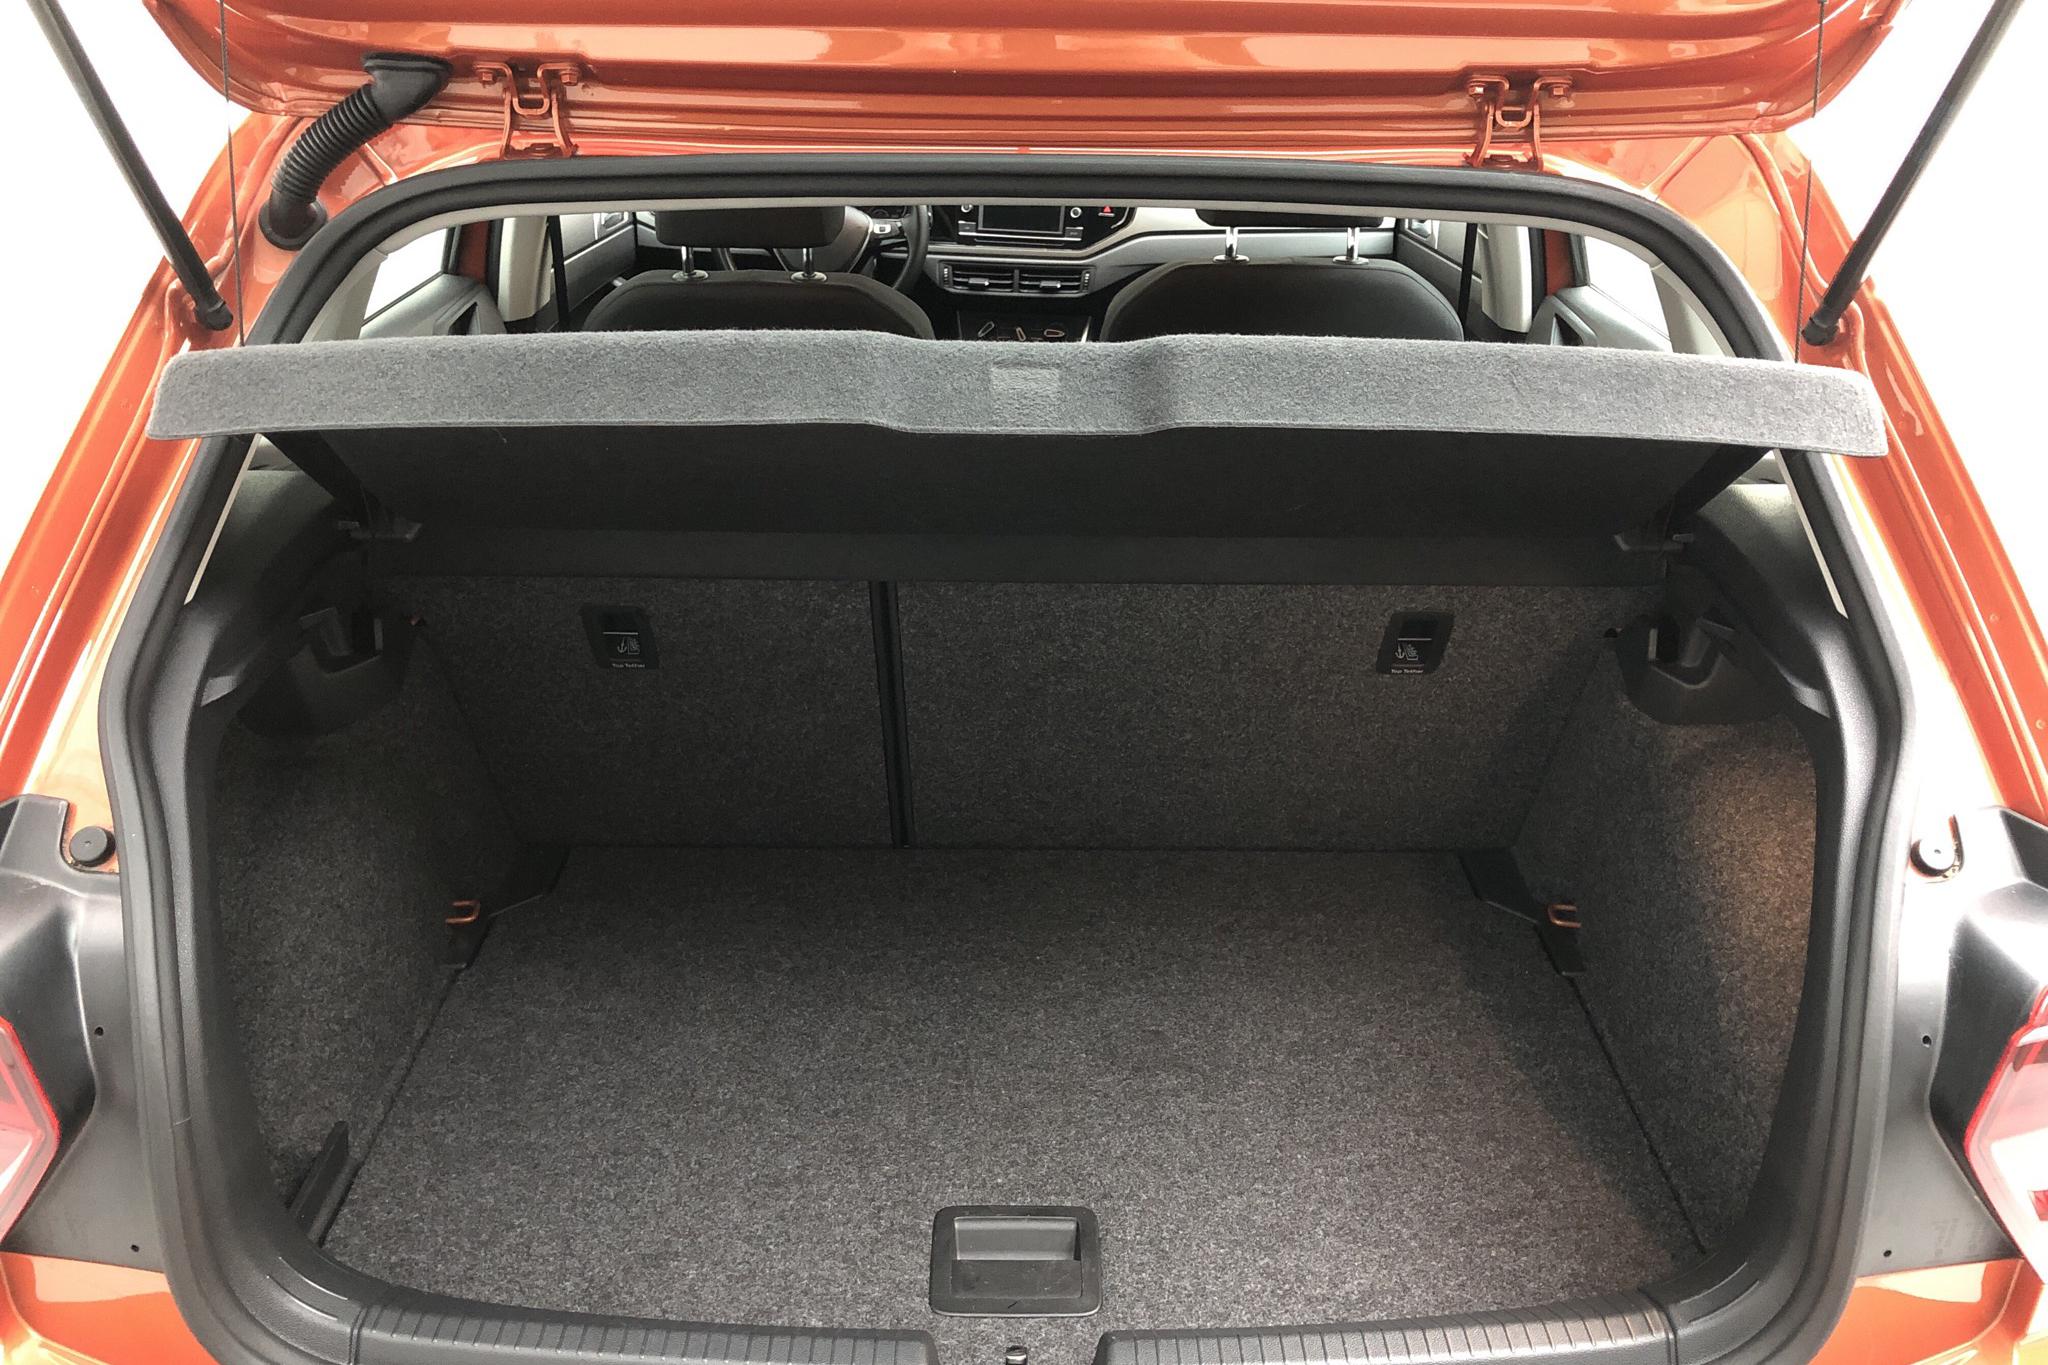 VW Polo 1.0 TSI 5dr (95hk) - 4 690 mil - Manuell - orange - 2018